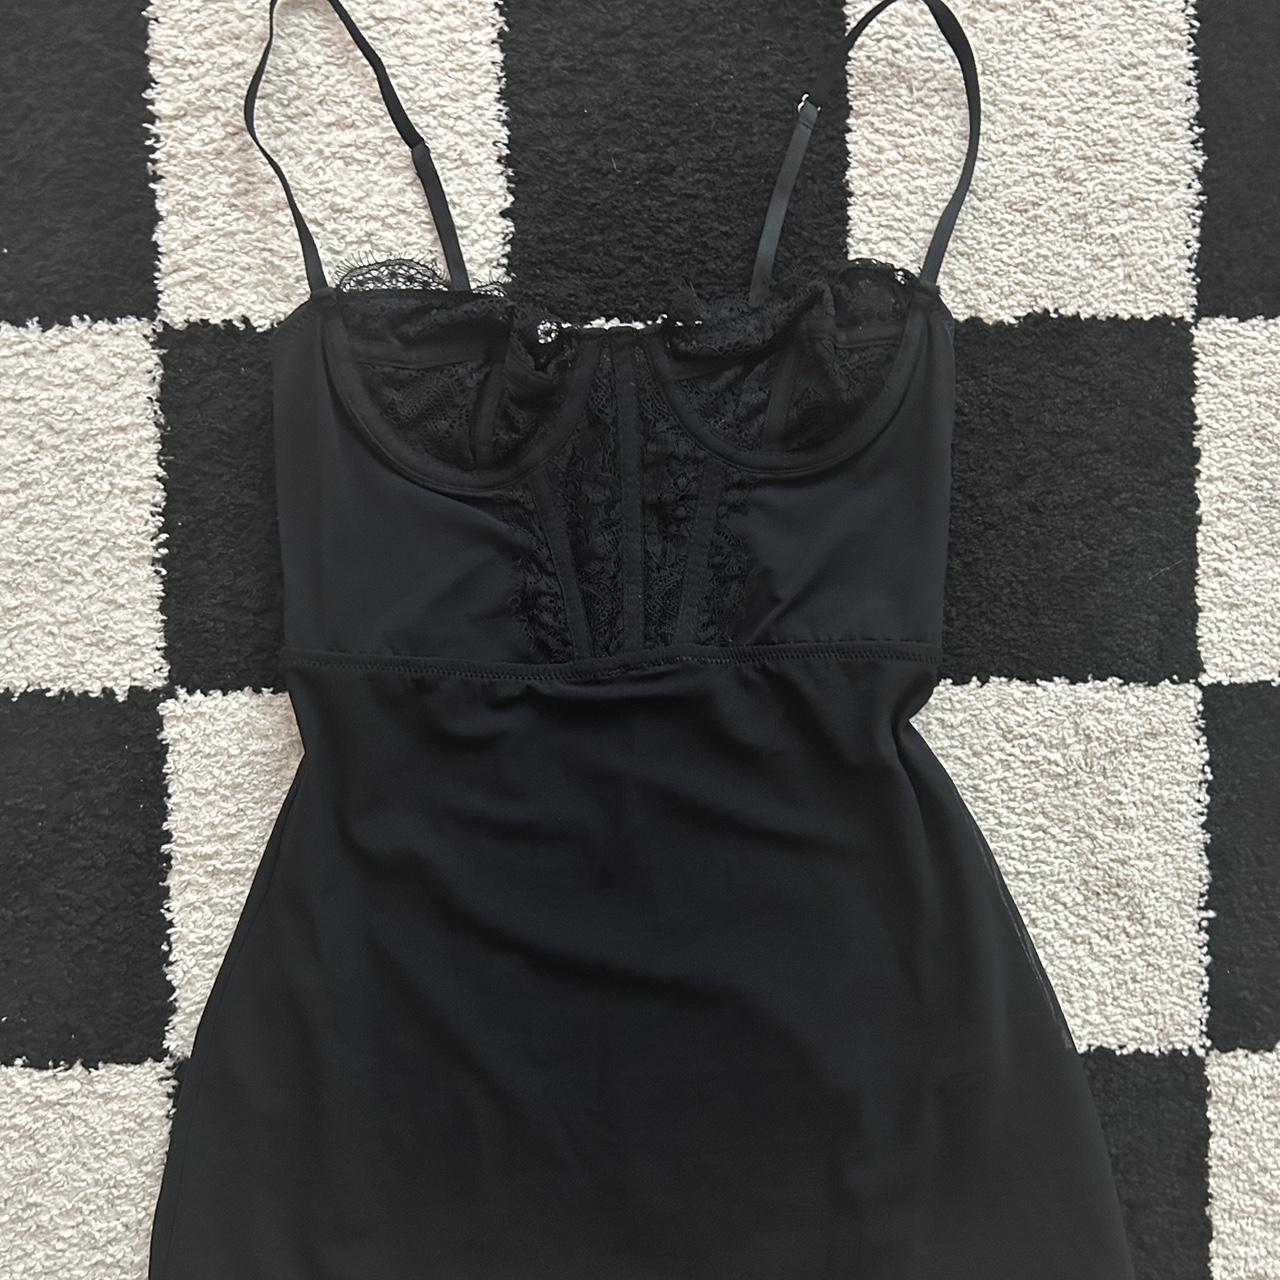 Urban Outfitters Viral Corset Mini Dress in Black... - Depop